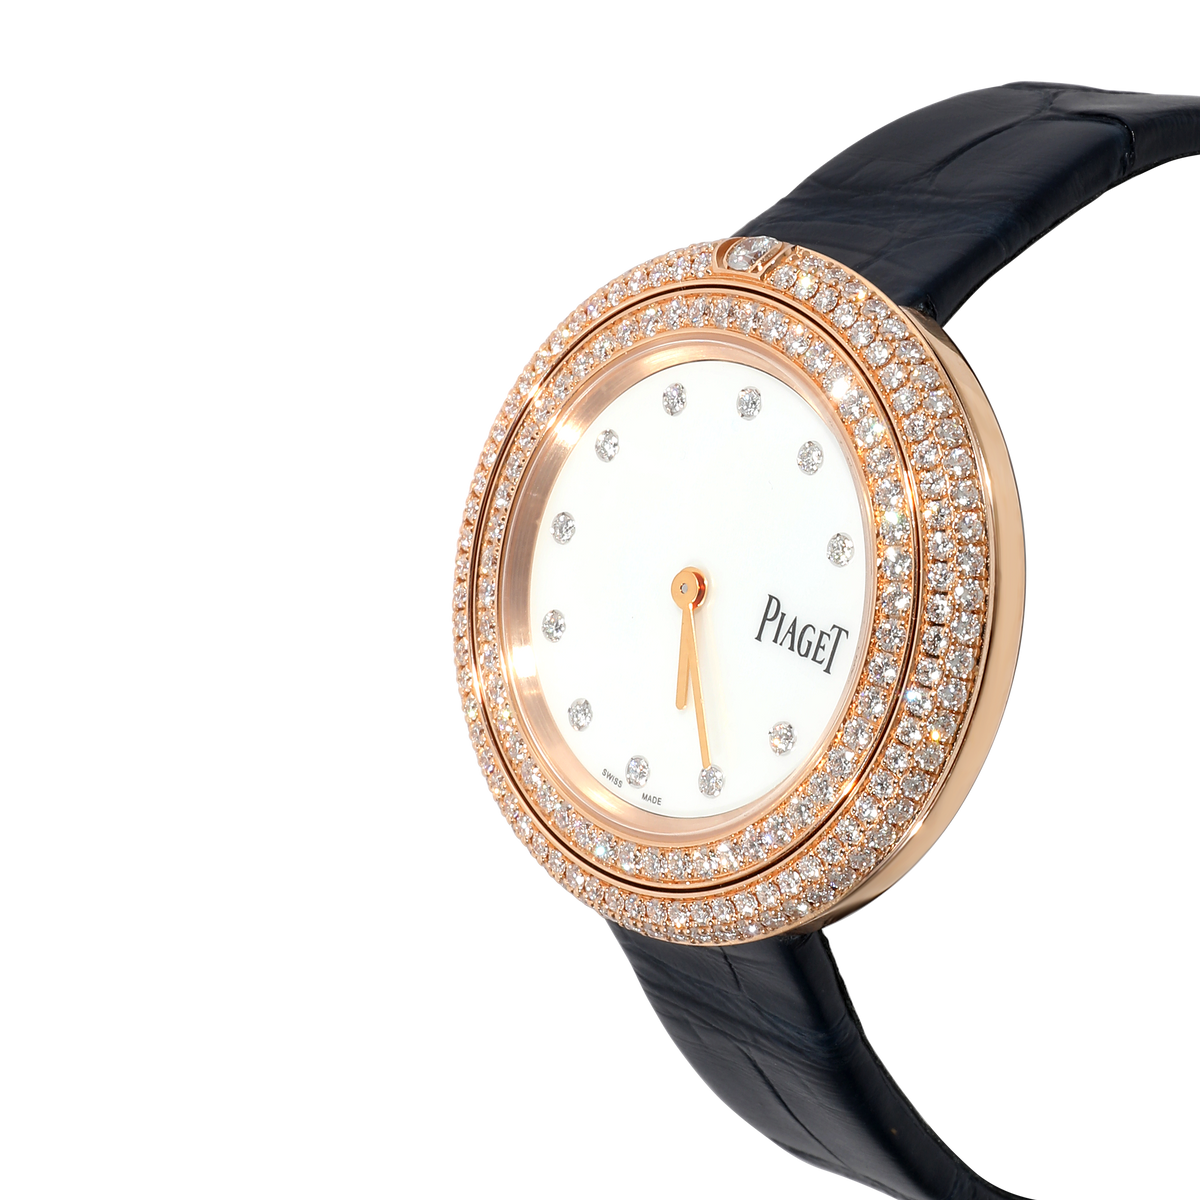 Piaget Possession GOA45092 Women's Watch in 18k Rose Gold